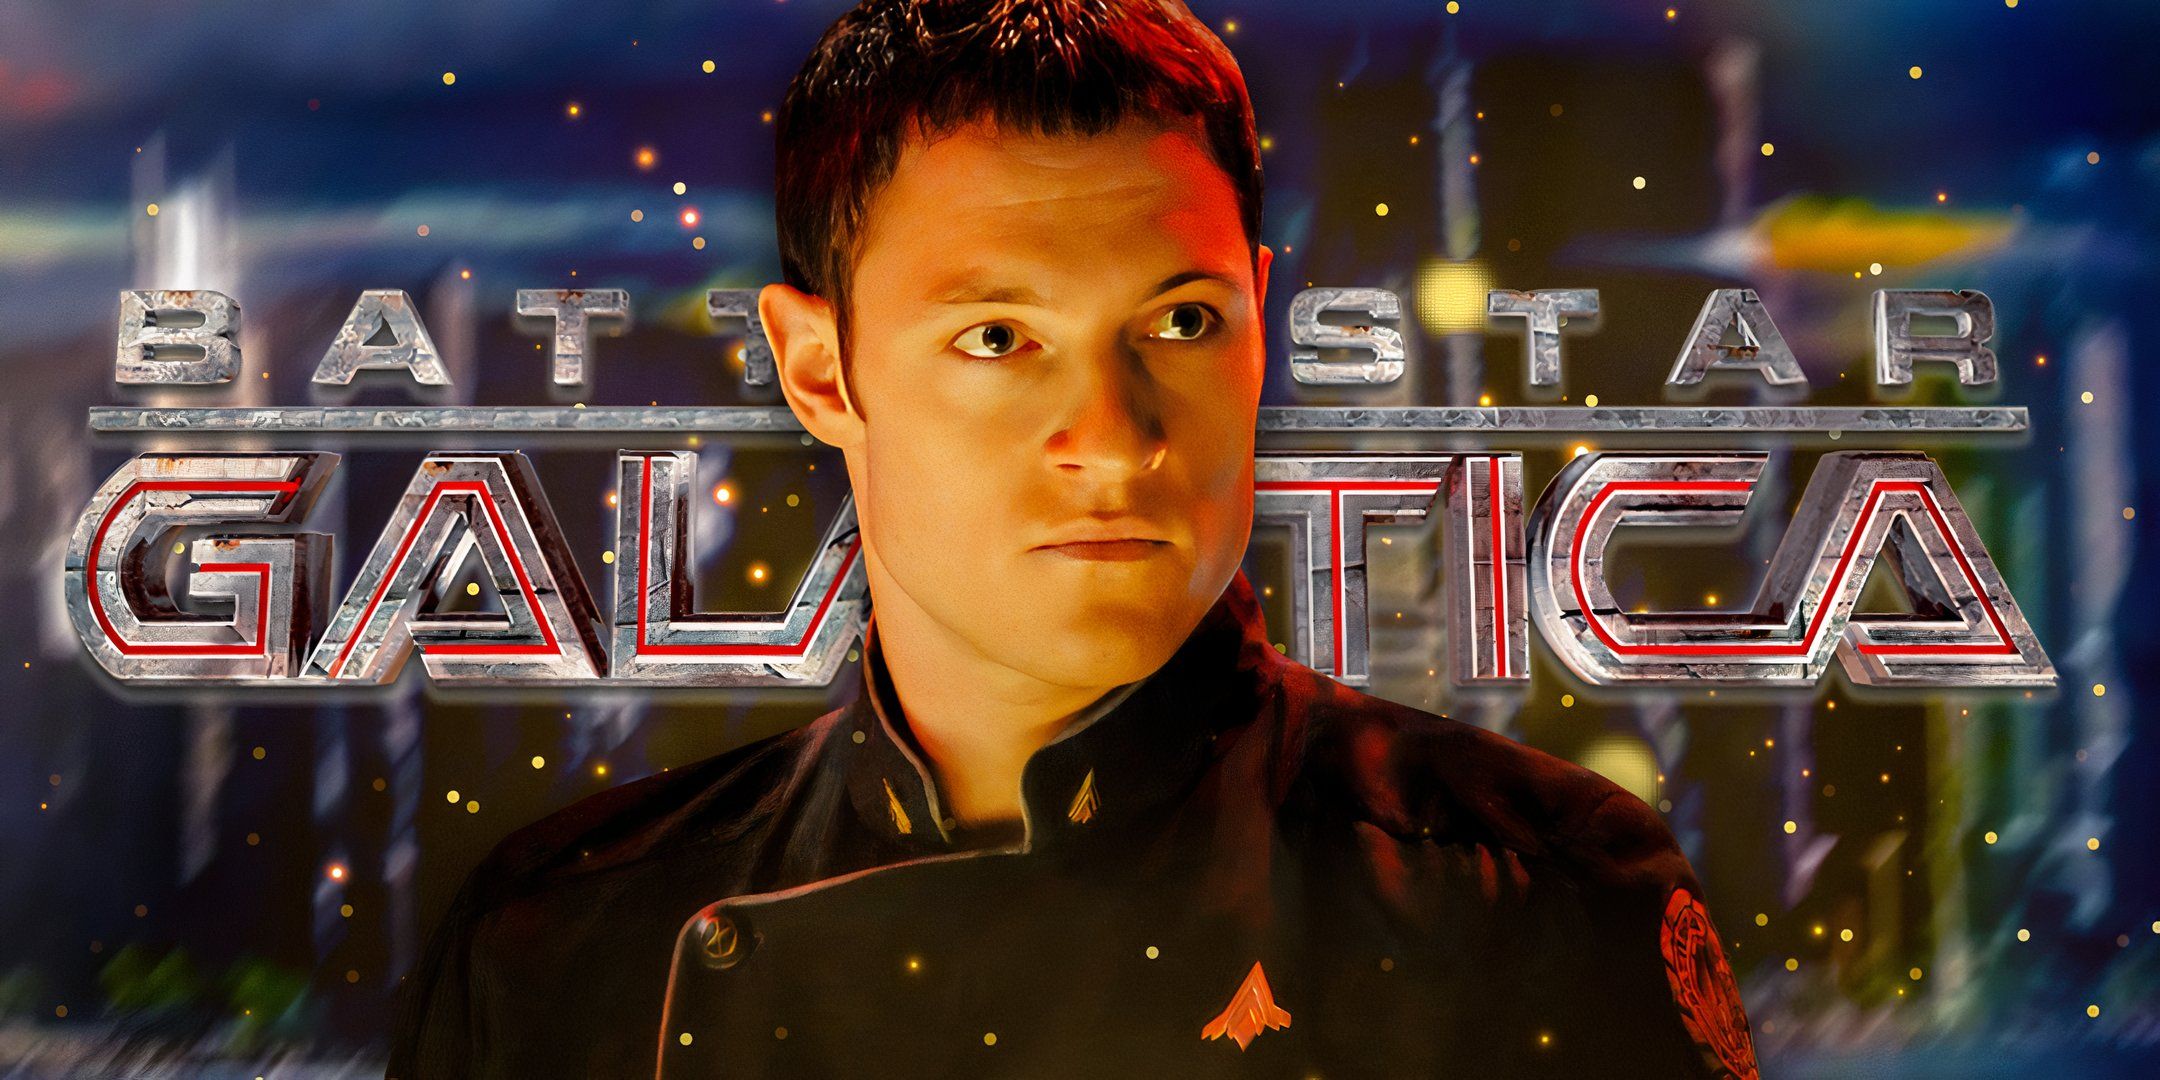 Tahmoh Penikett as Captain Karl Helo Agathon from Battlestar Galactica